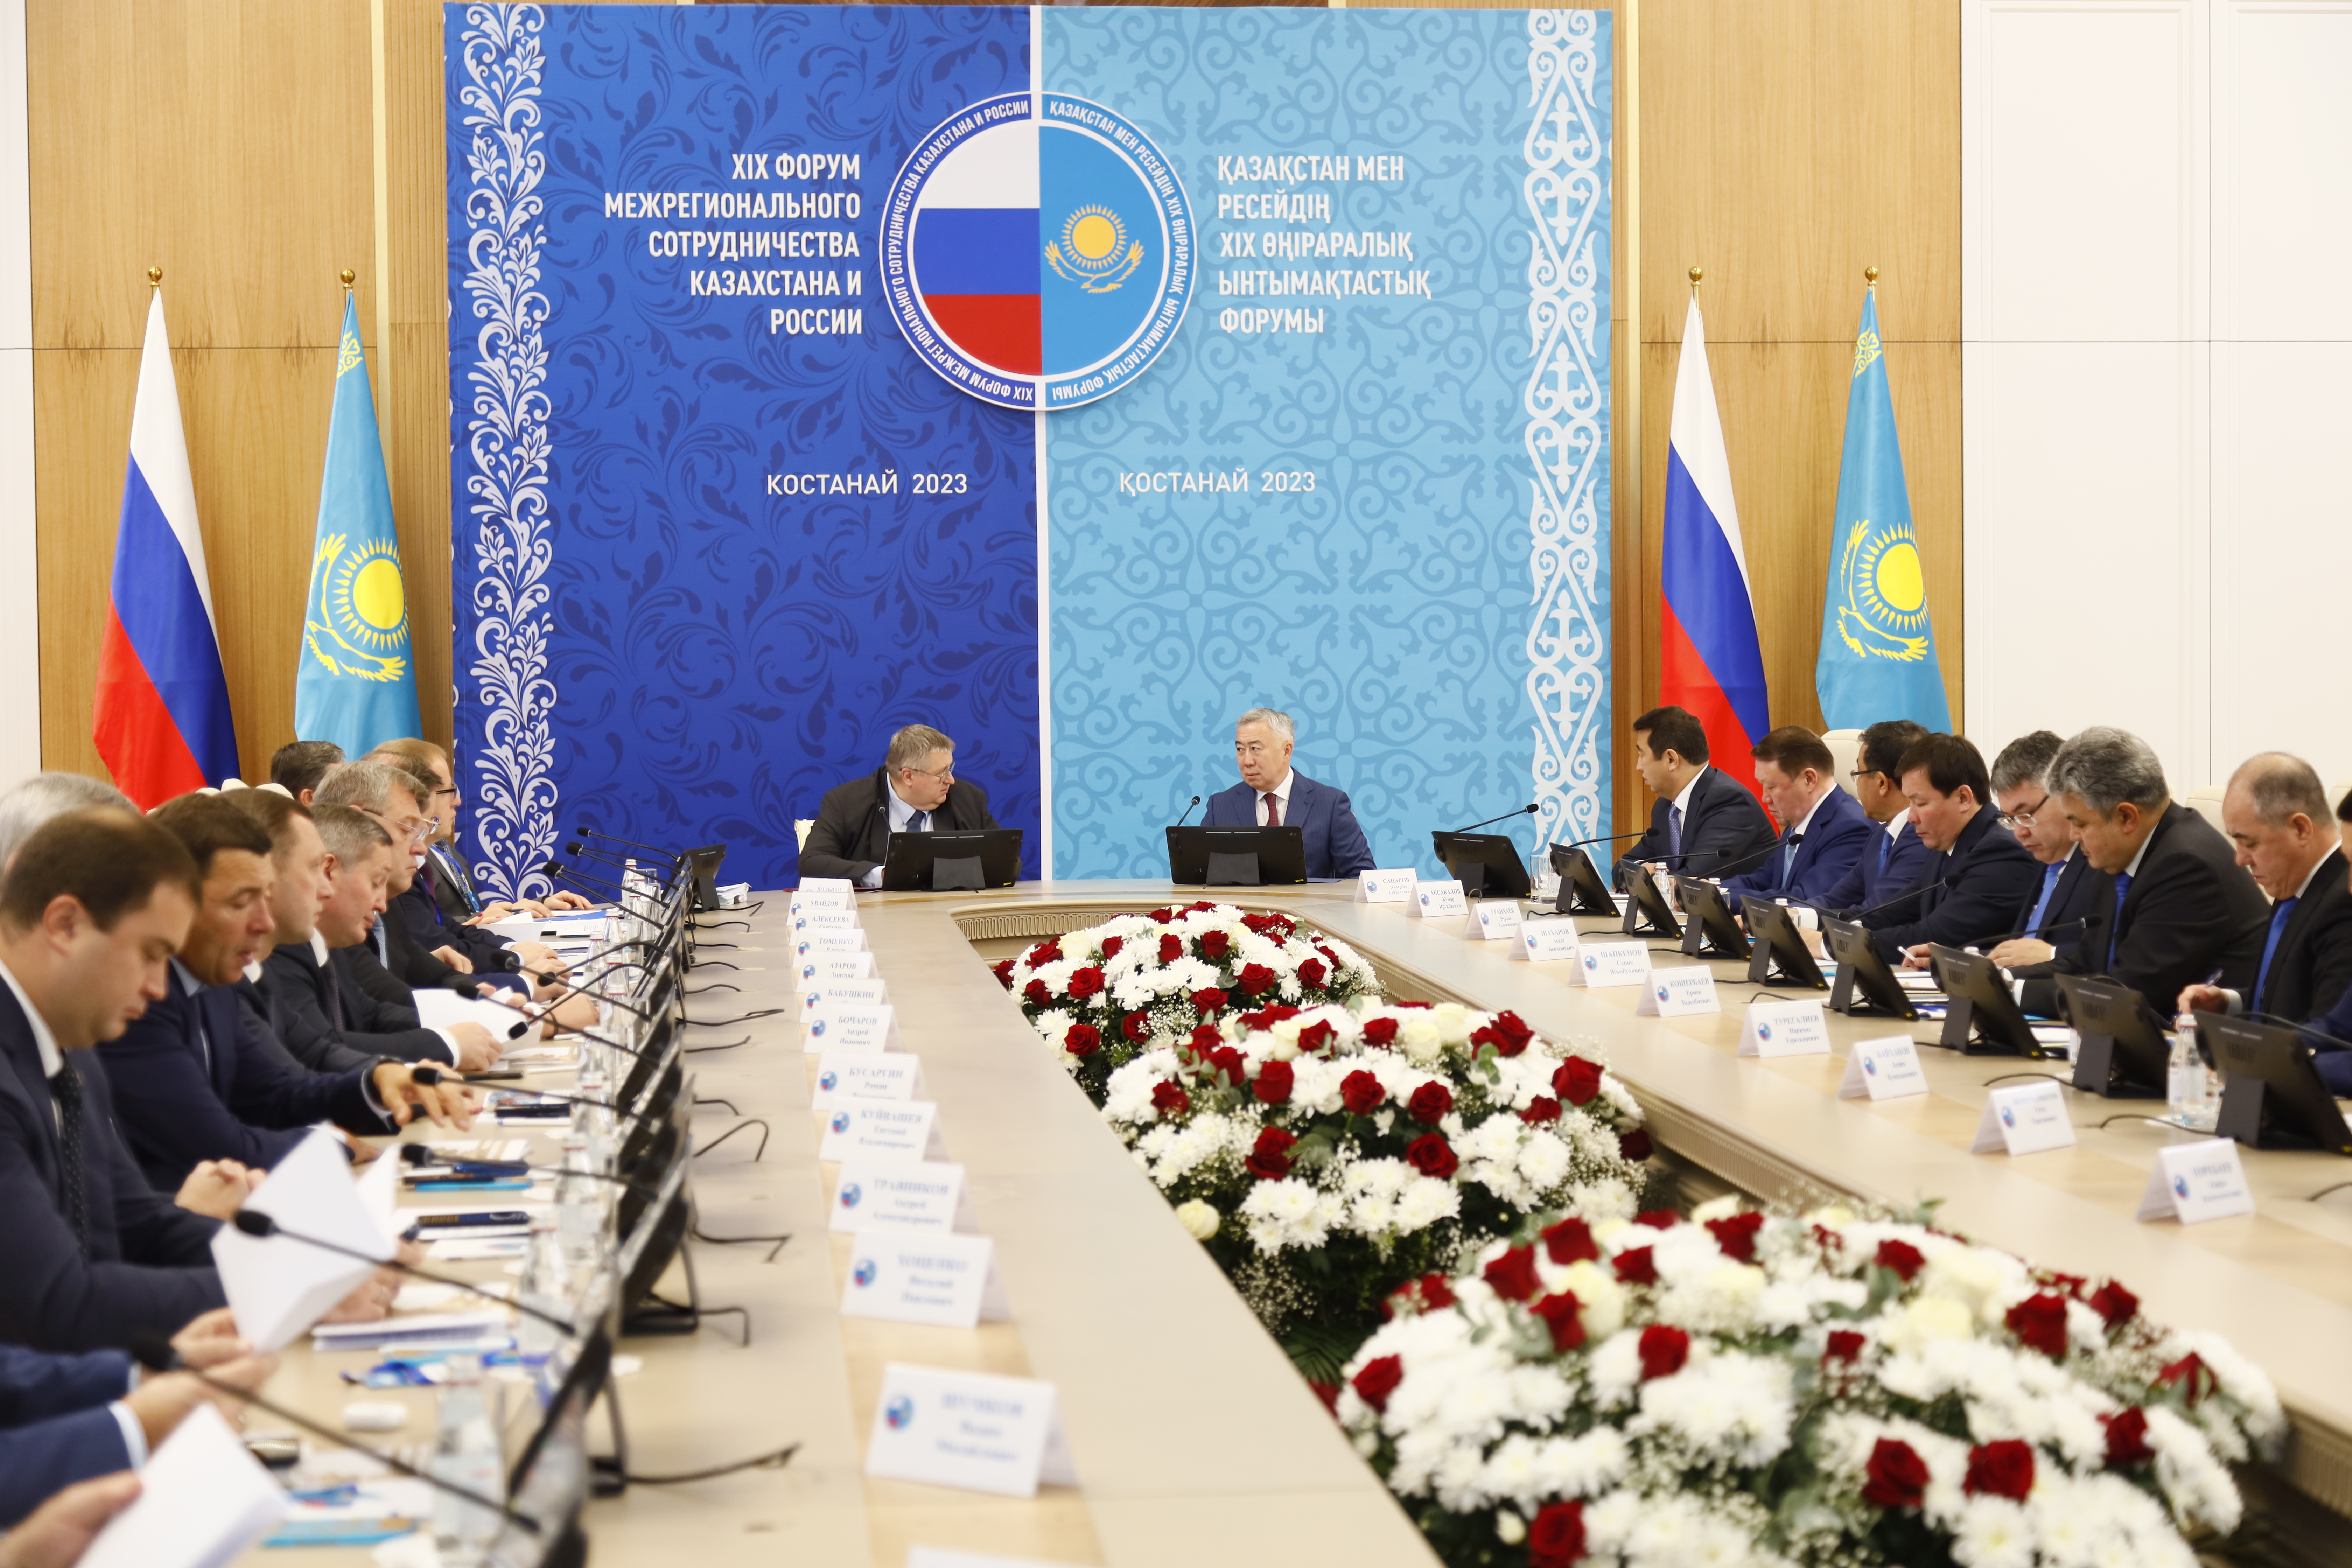 Aidarbek Saparov spoke at the Forum of Interregional Cooperation between Kazakhstan and Russia